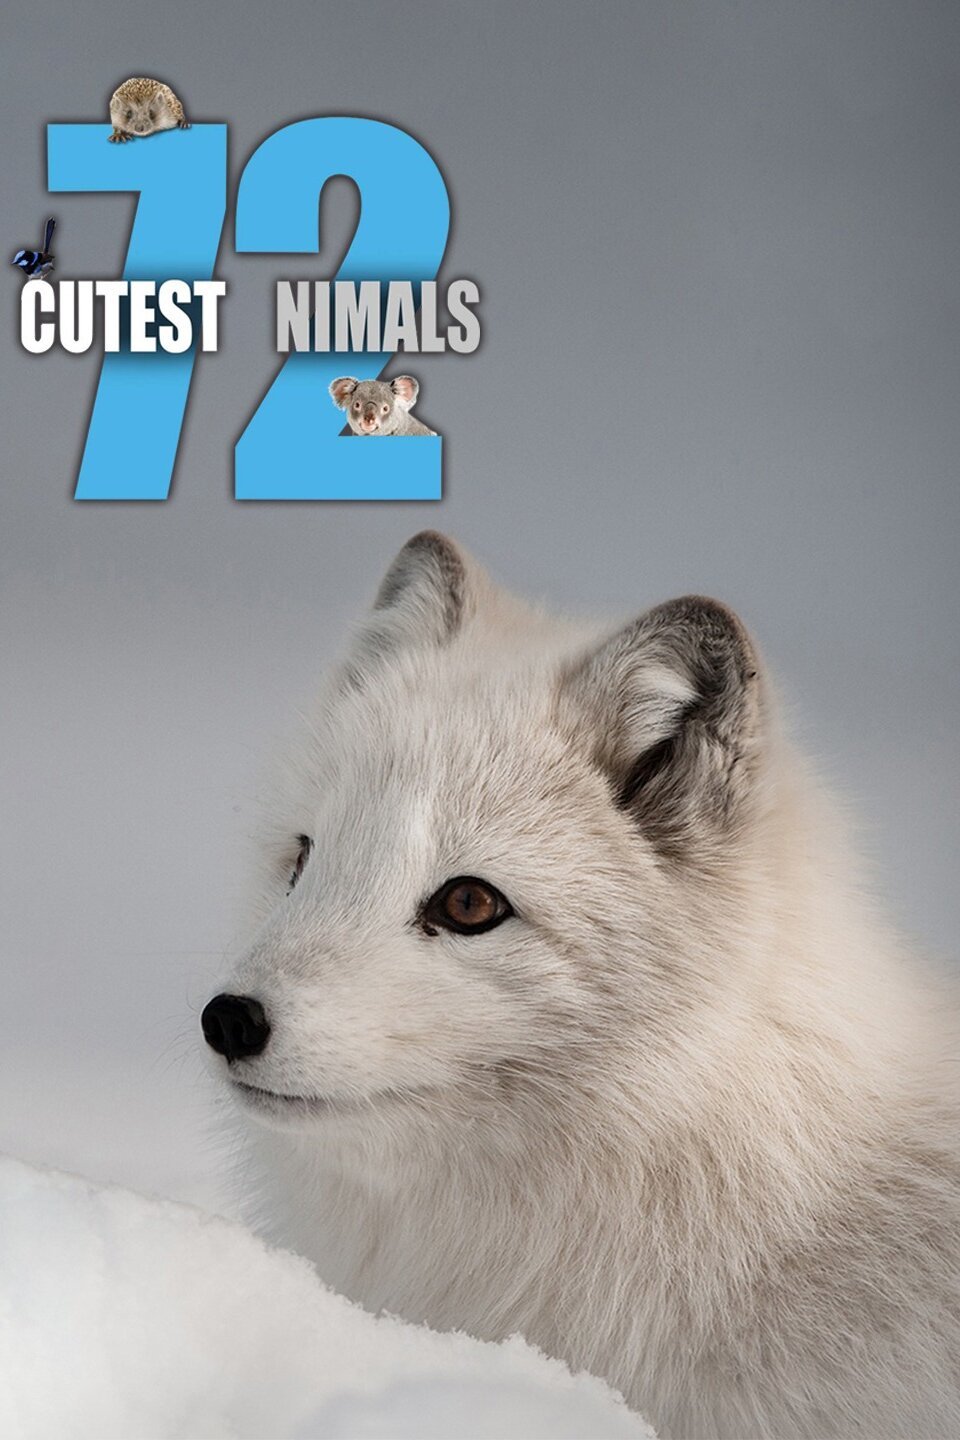 72 Cutest Animals - Rotten Tomatoes